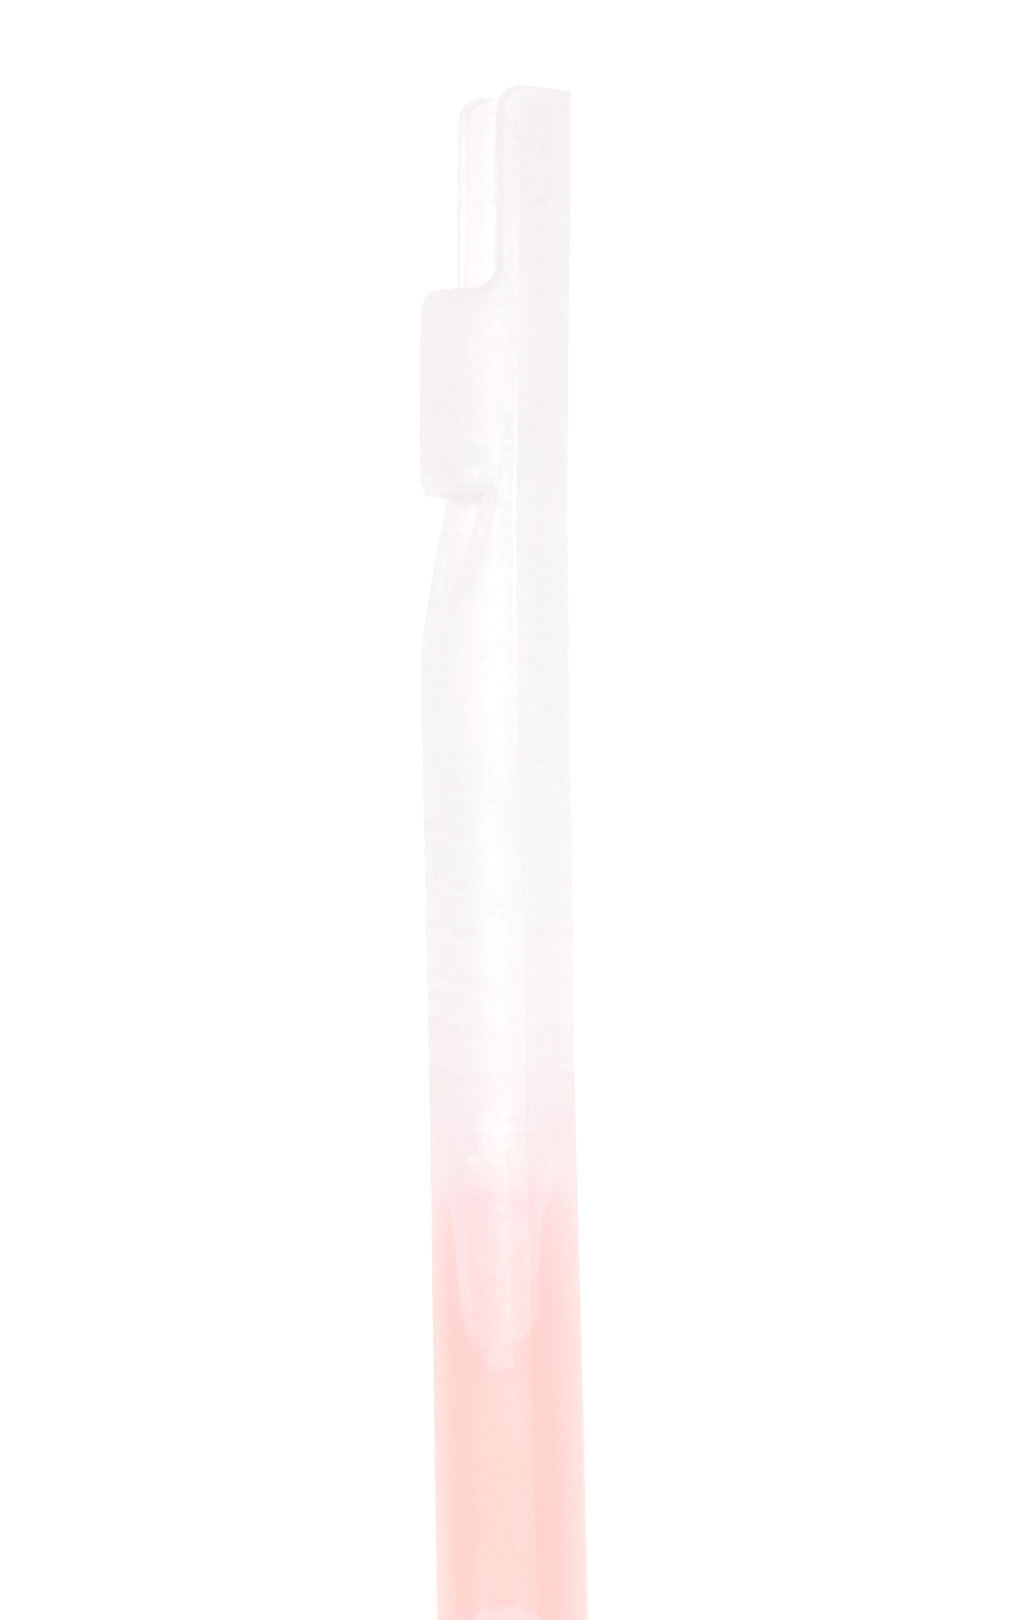 Палочка световая Mil-Tec 24 см. white 